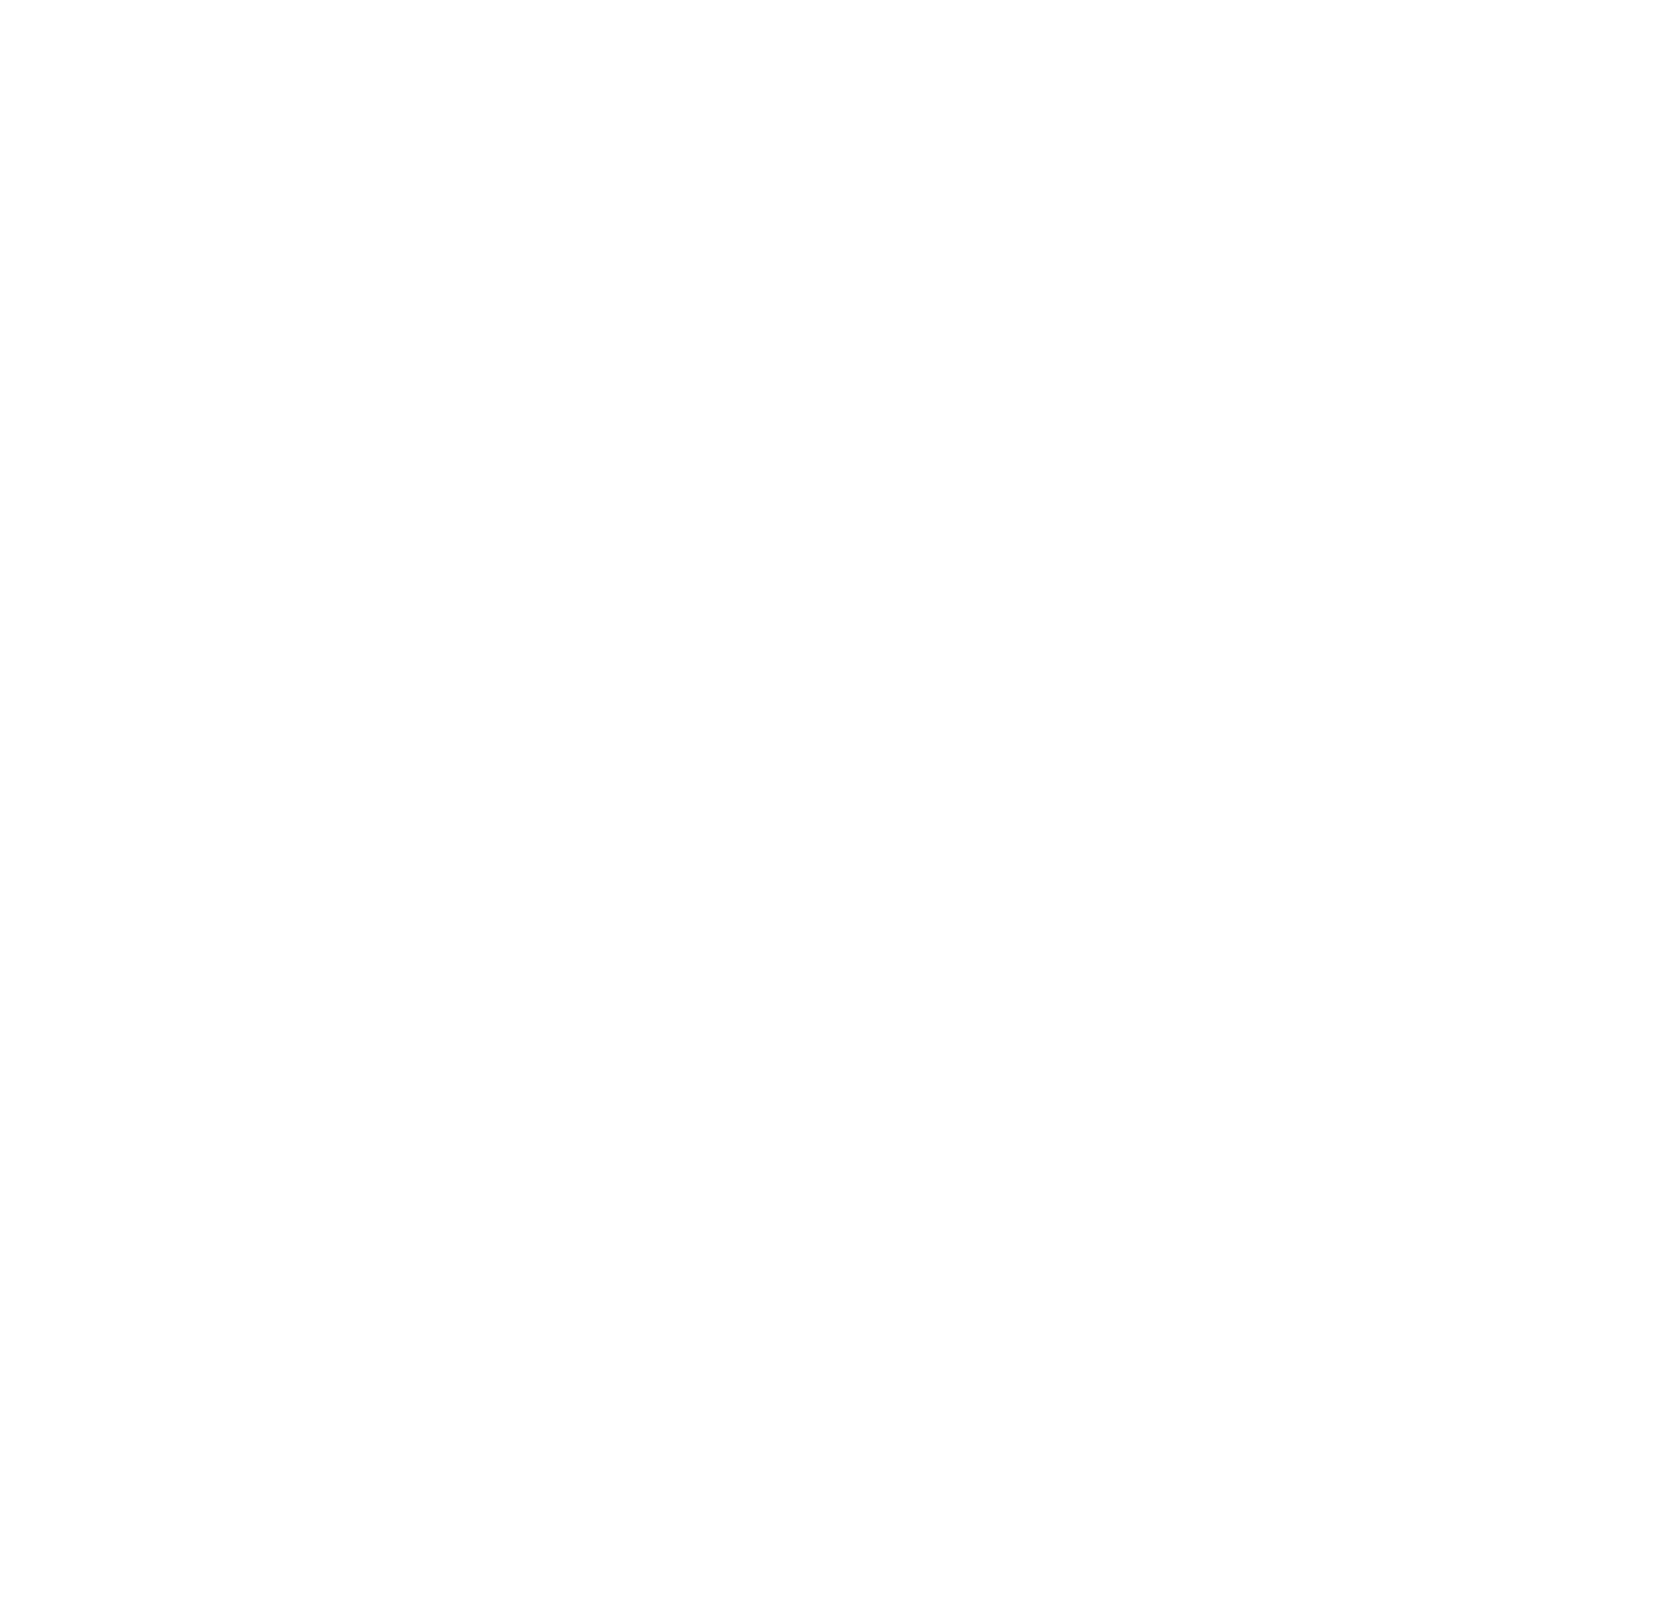 The Optiek Devriese logo